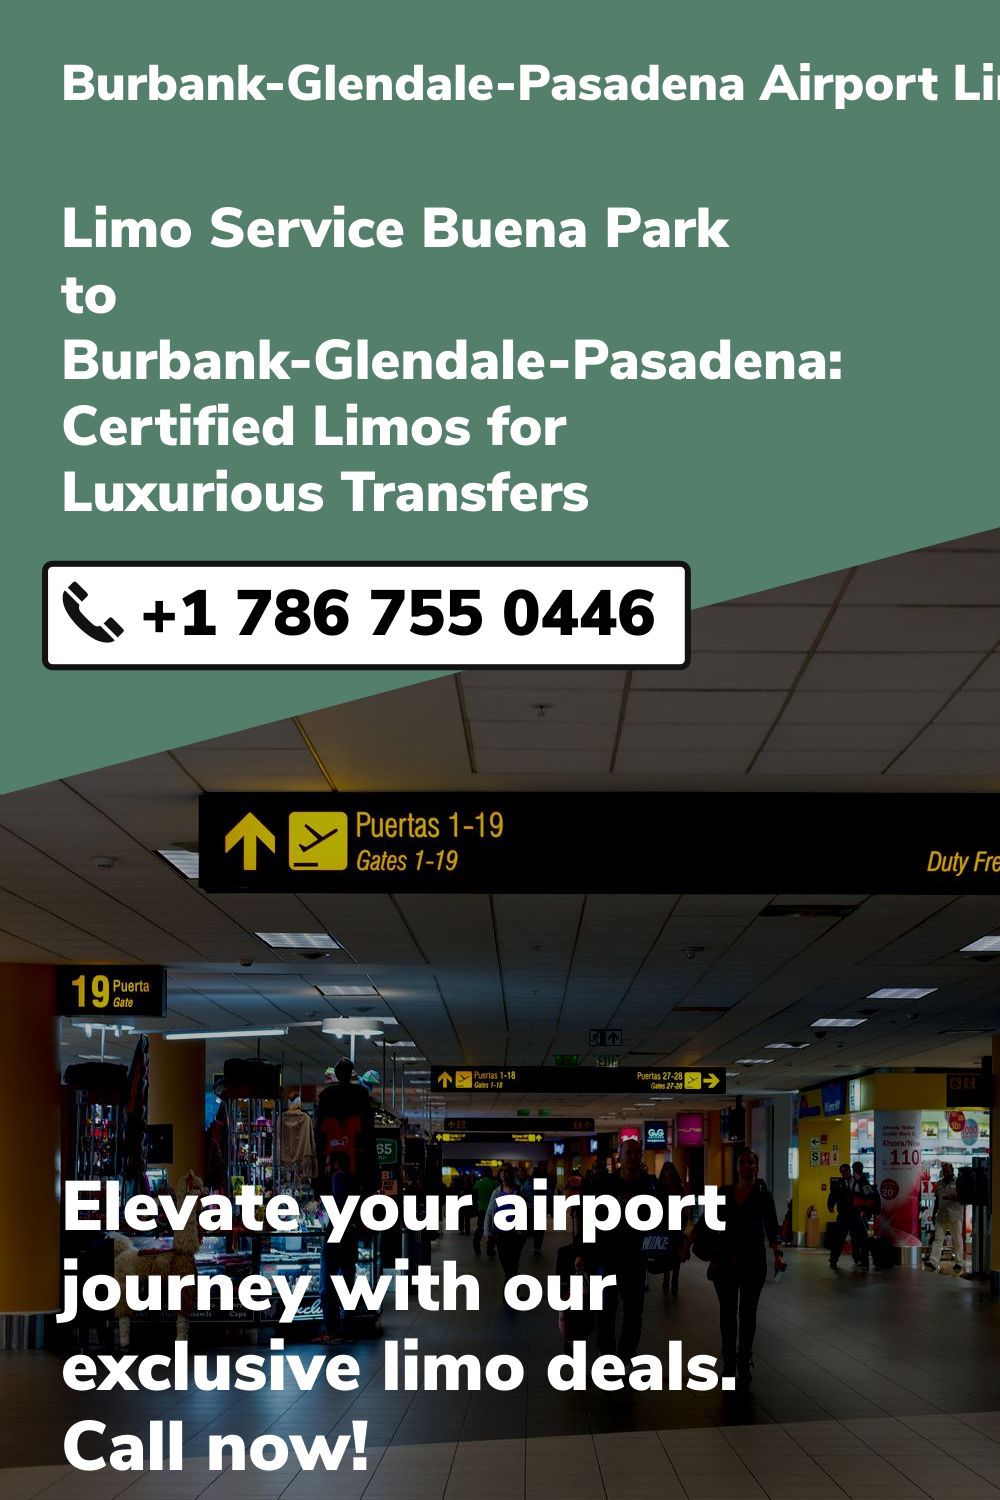 Burbank-Glendale-Pasadena Airport Limo